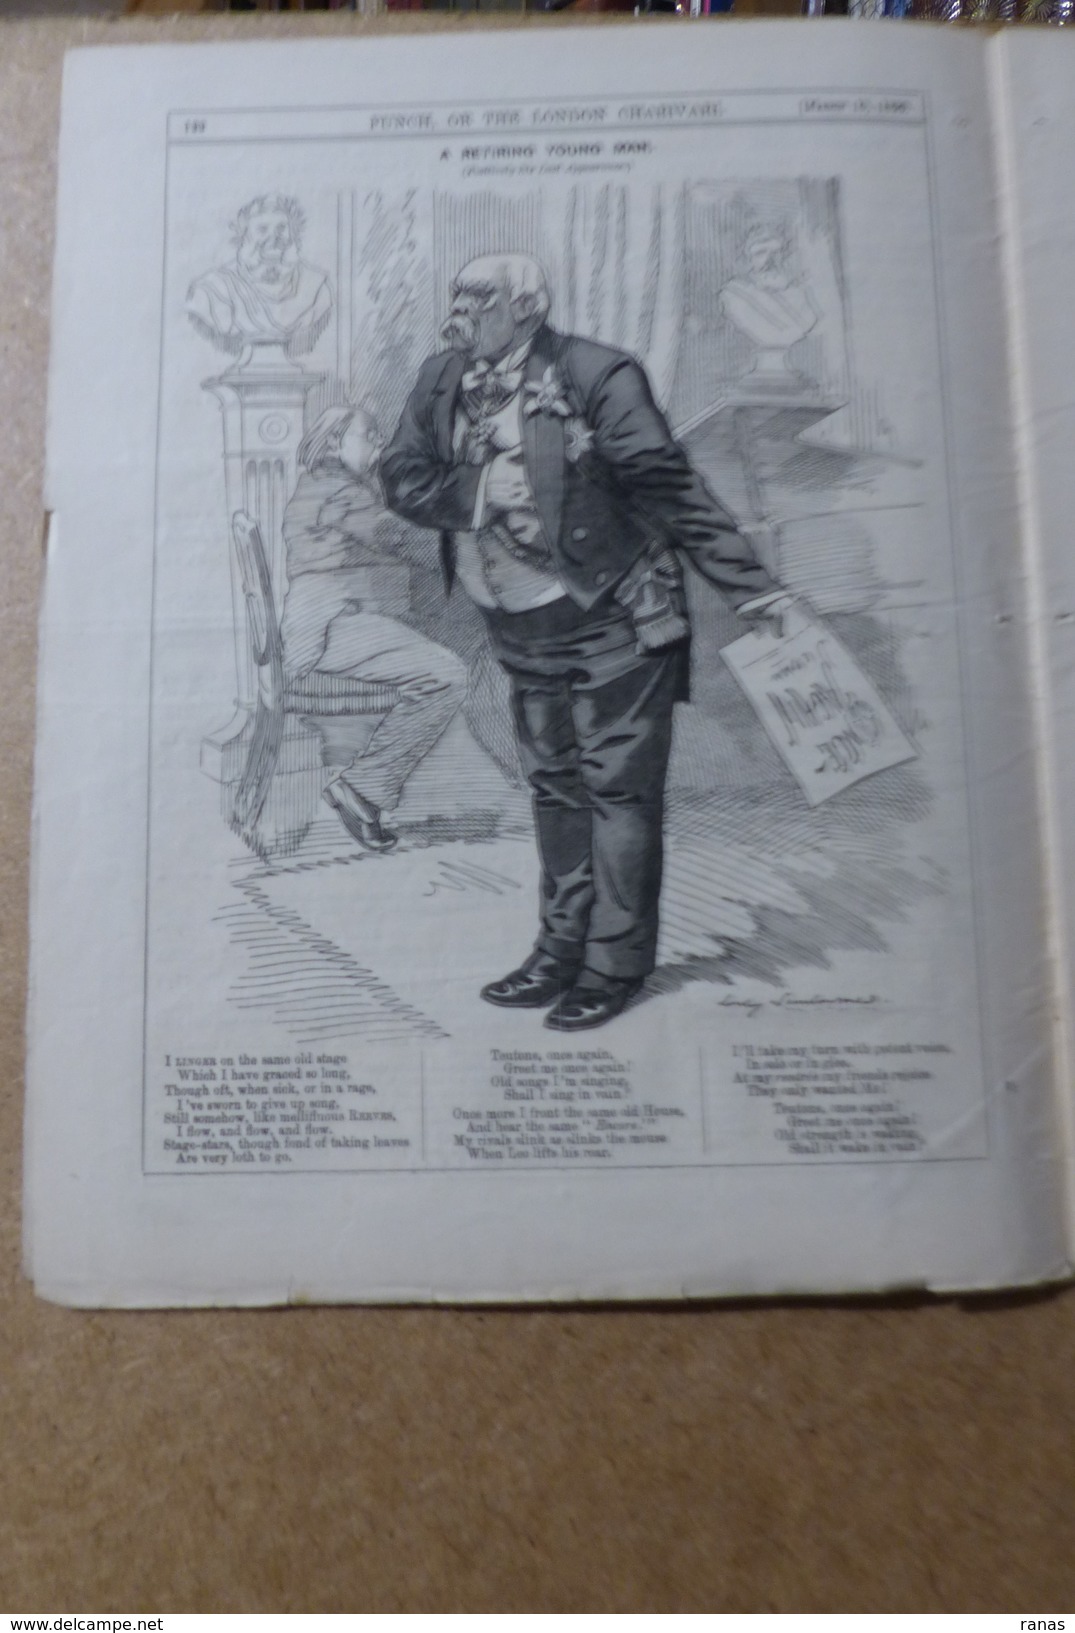 Revue Journal PUNCH Satirique Caricature 29 X 22,5 Germany Allemagne Bismarck N° 2540 De 1890 - 1850 - 1899